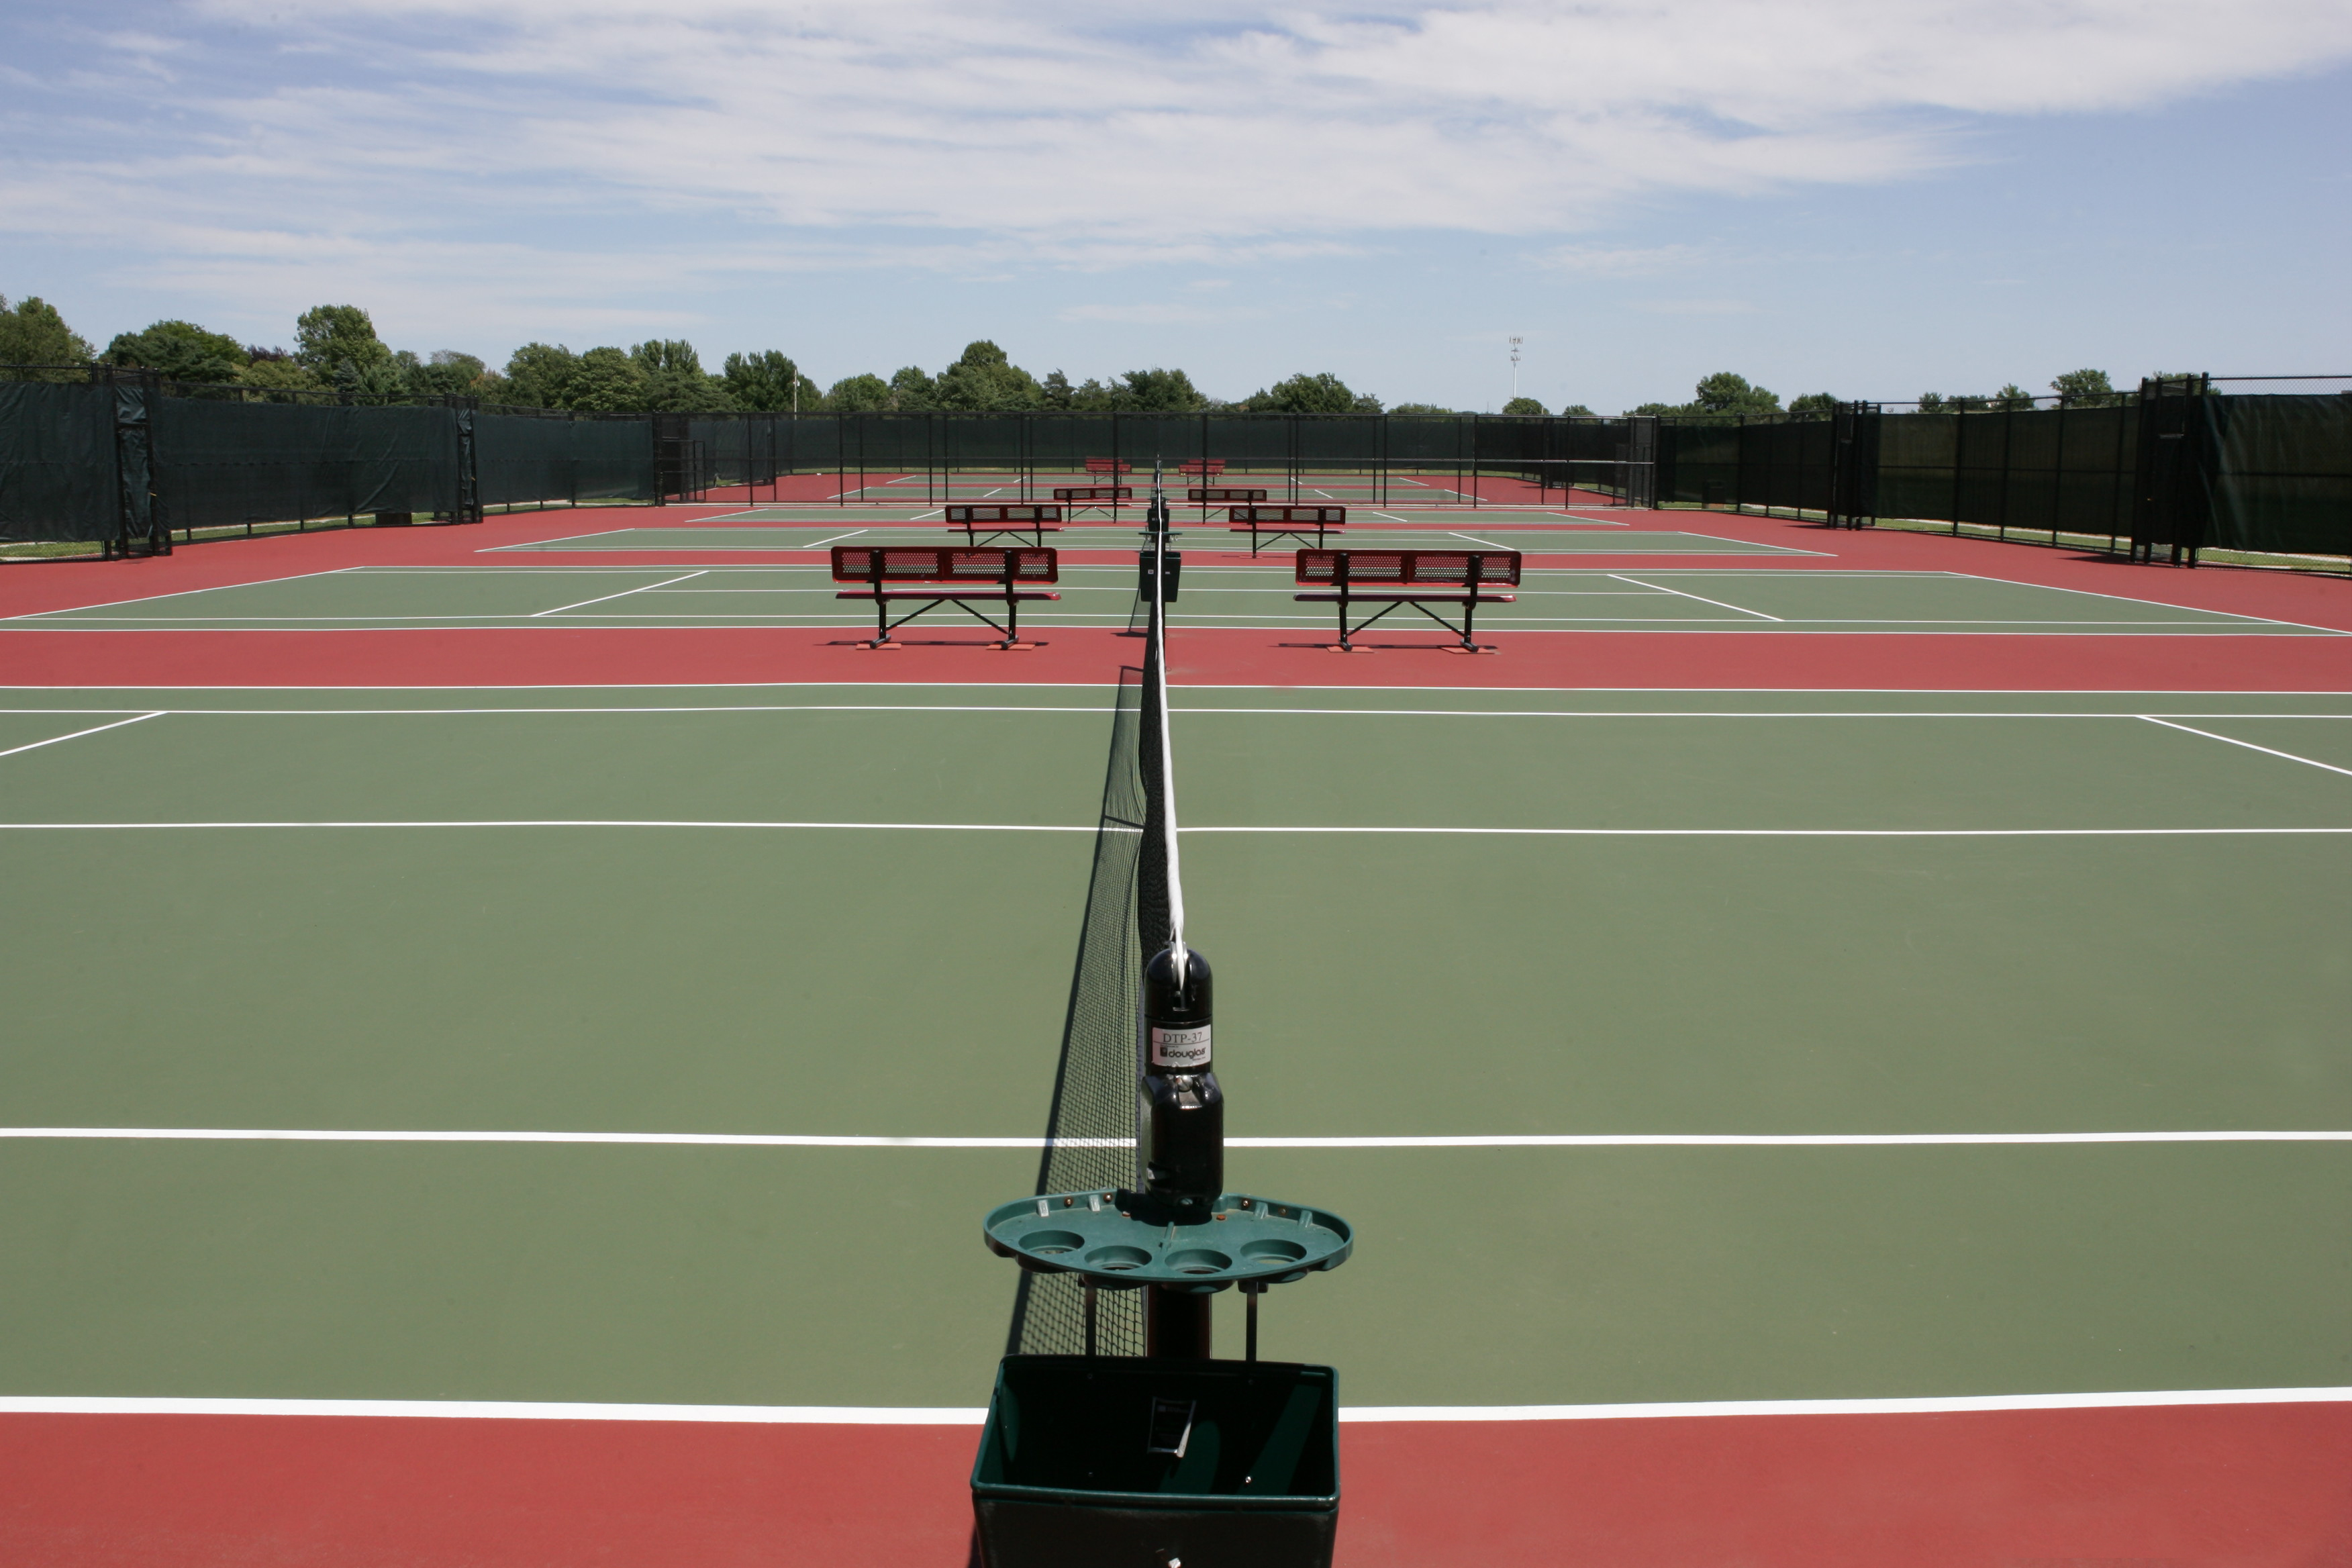 empty tennis courts